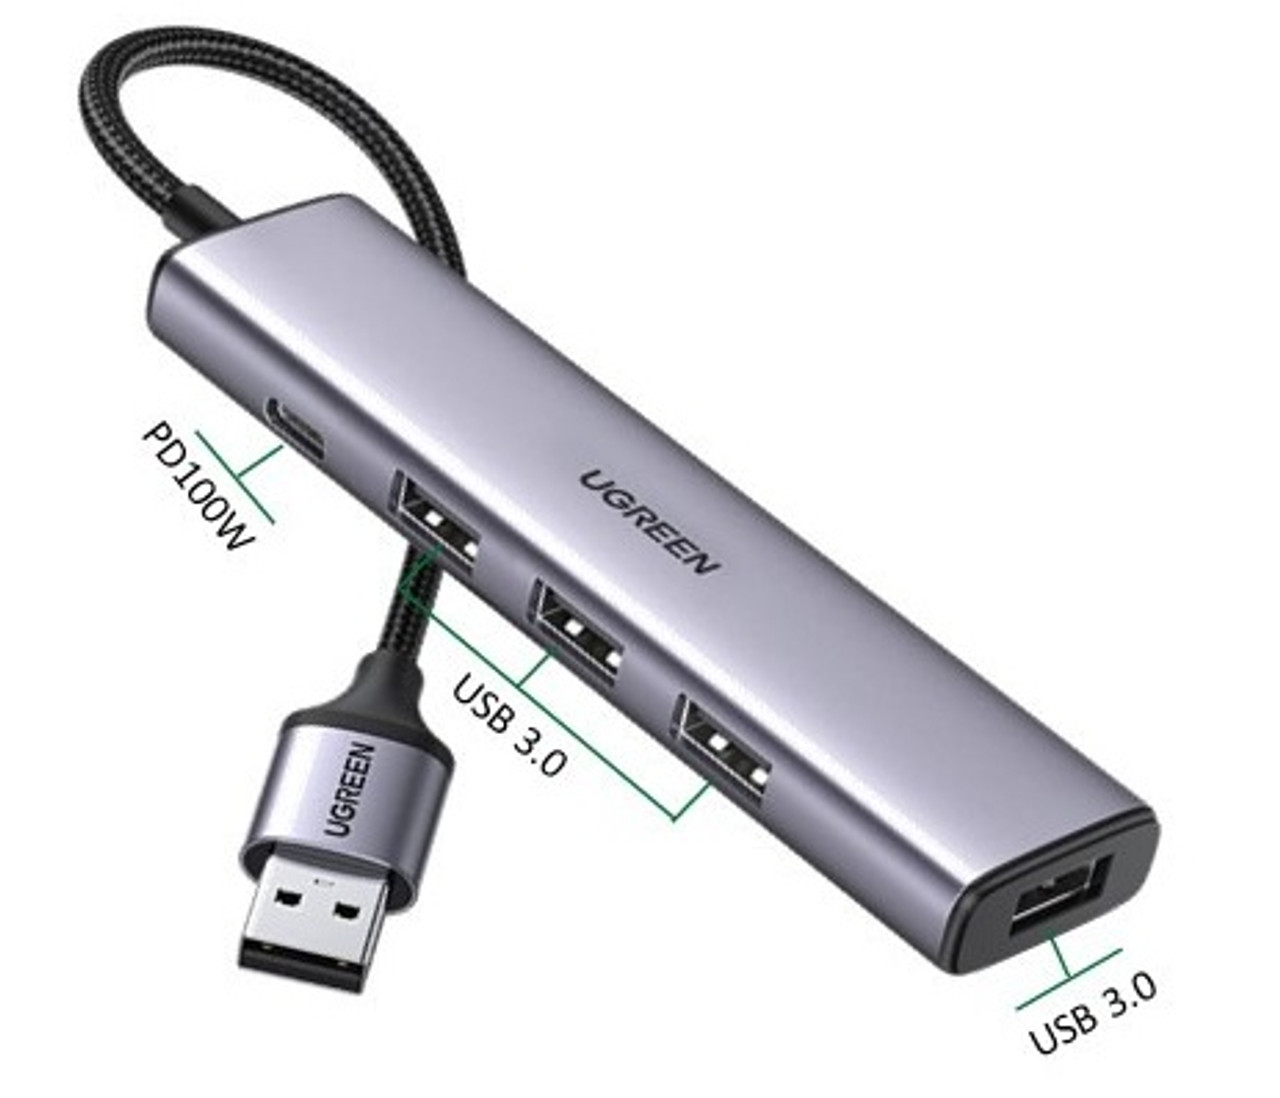 UGREEN Hub USB C a USB 3.0 4 Puertos, 5Gbps OTG Mini Hub Ladrón USB C